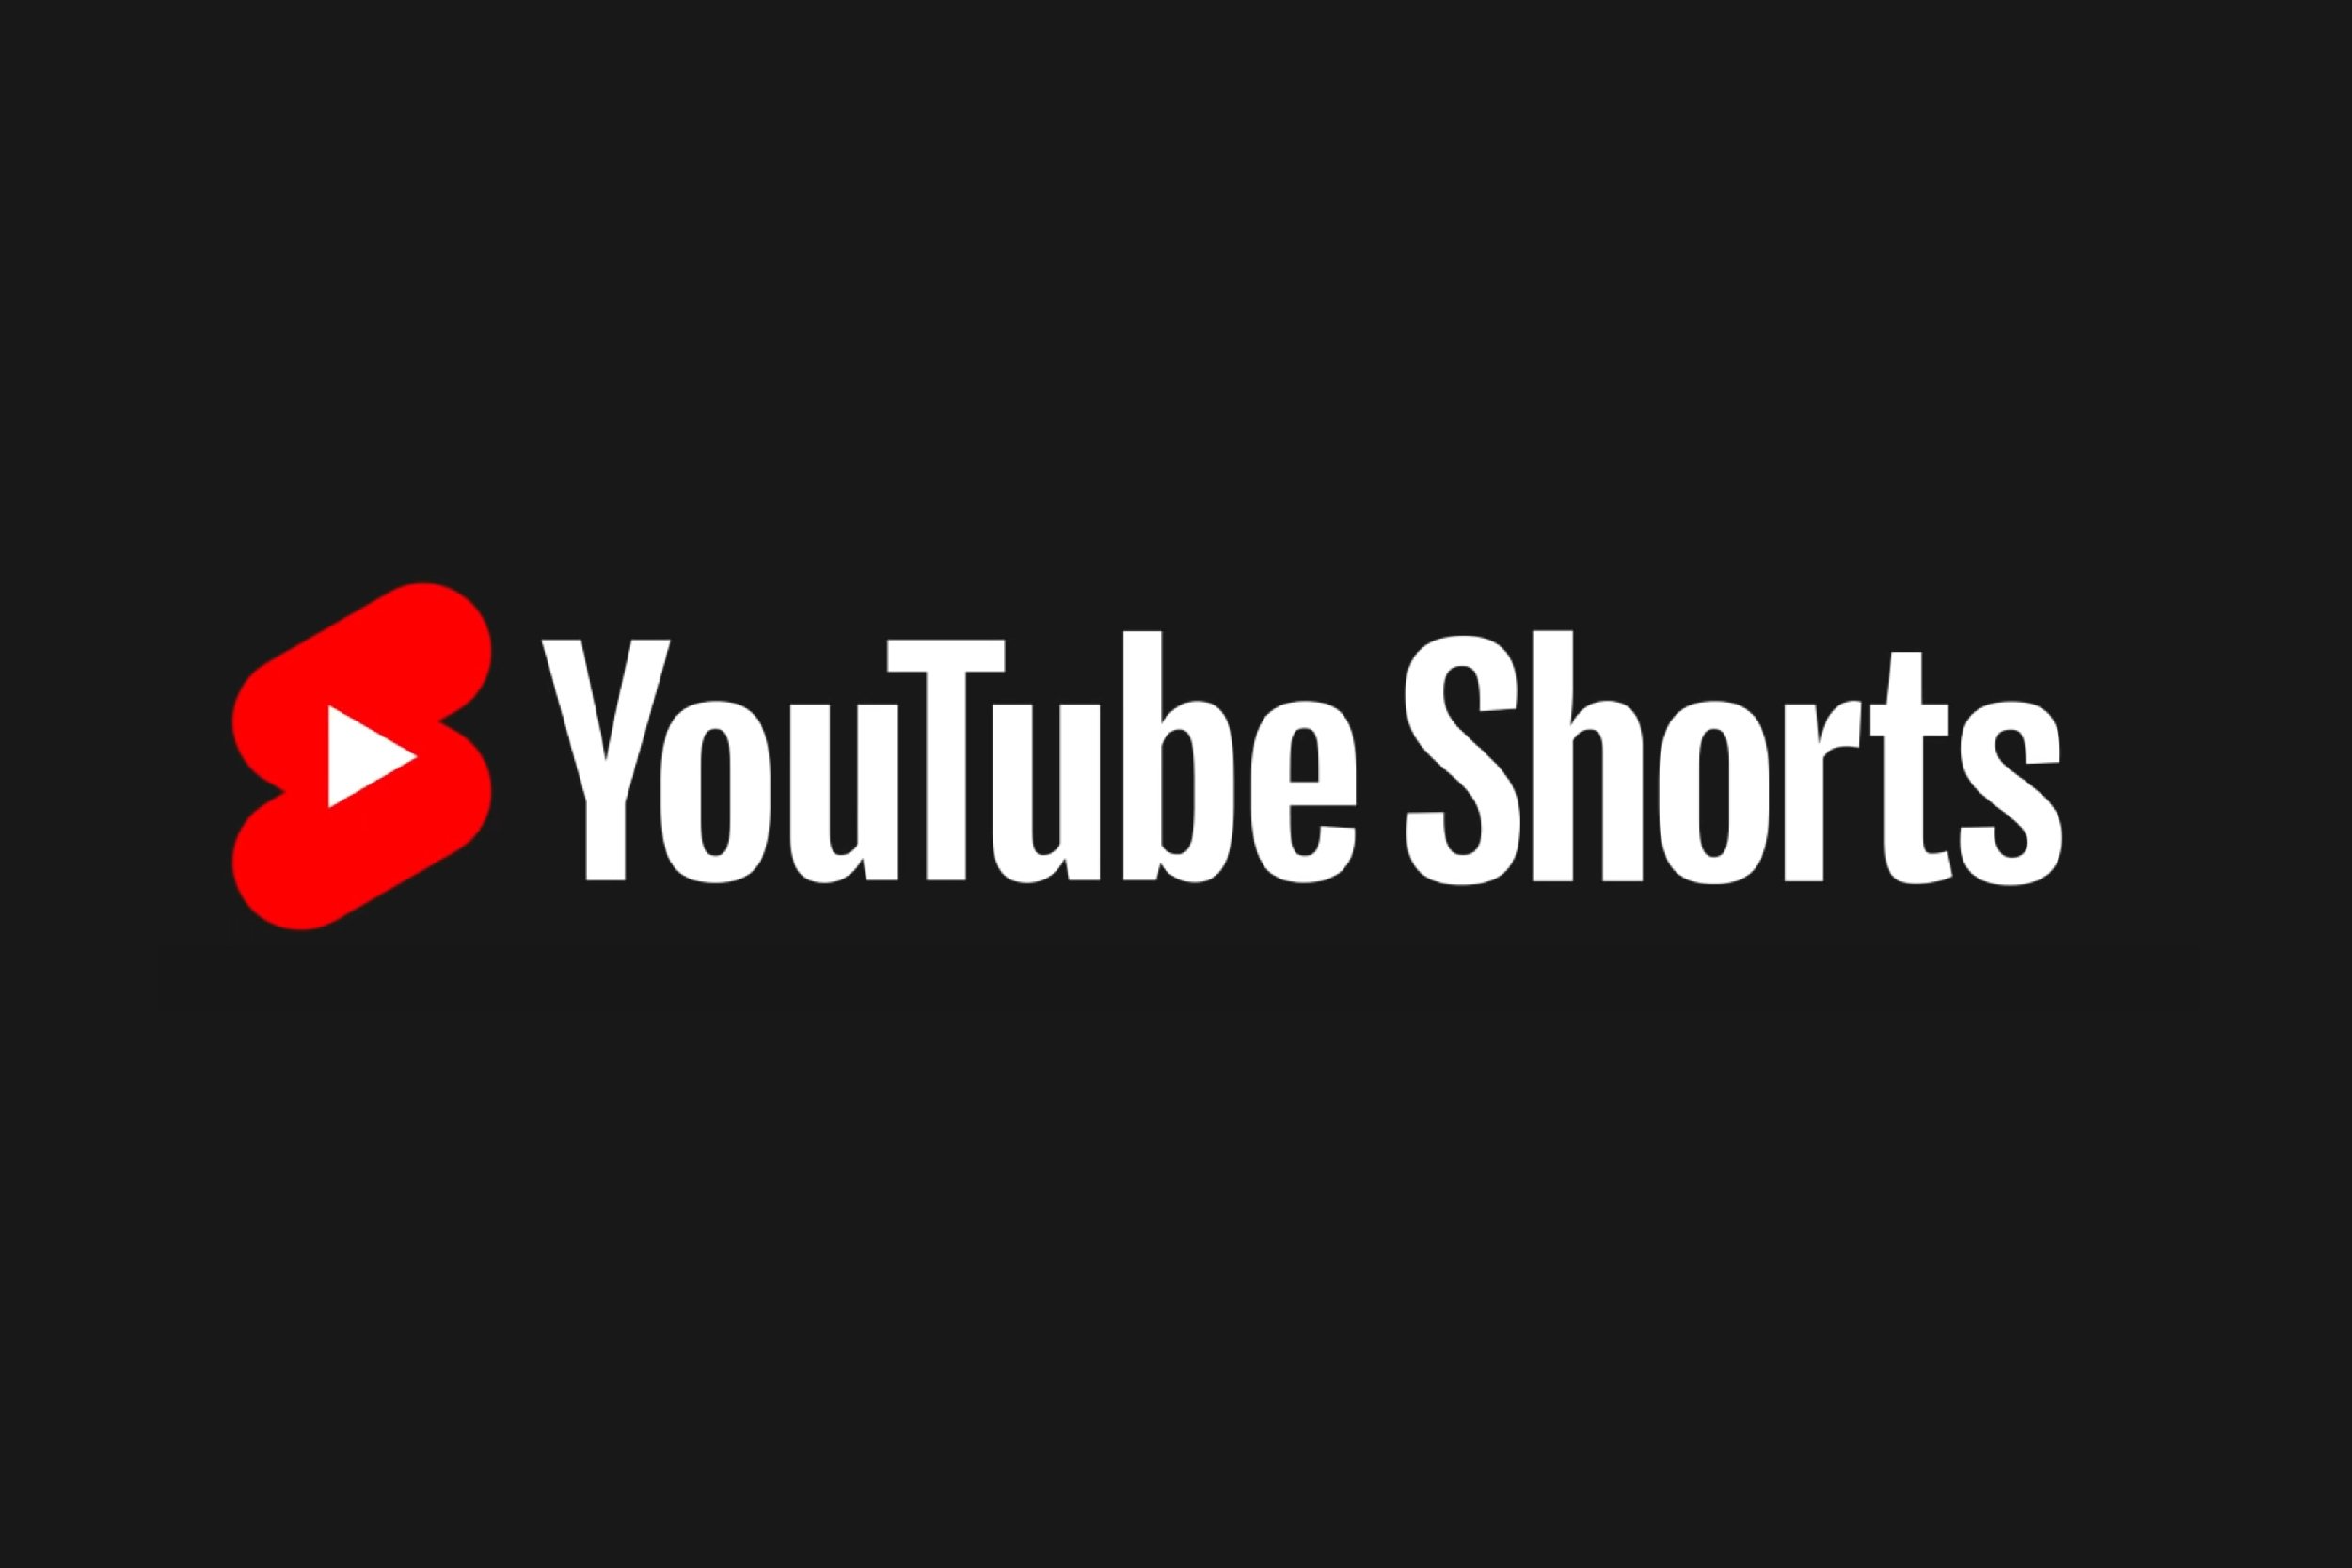 Надпись shorted. Youtube shorts. Логотип ю тьюб Шортс. Ютуб Шортс иконка. Шортс видео ютуб.